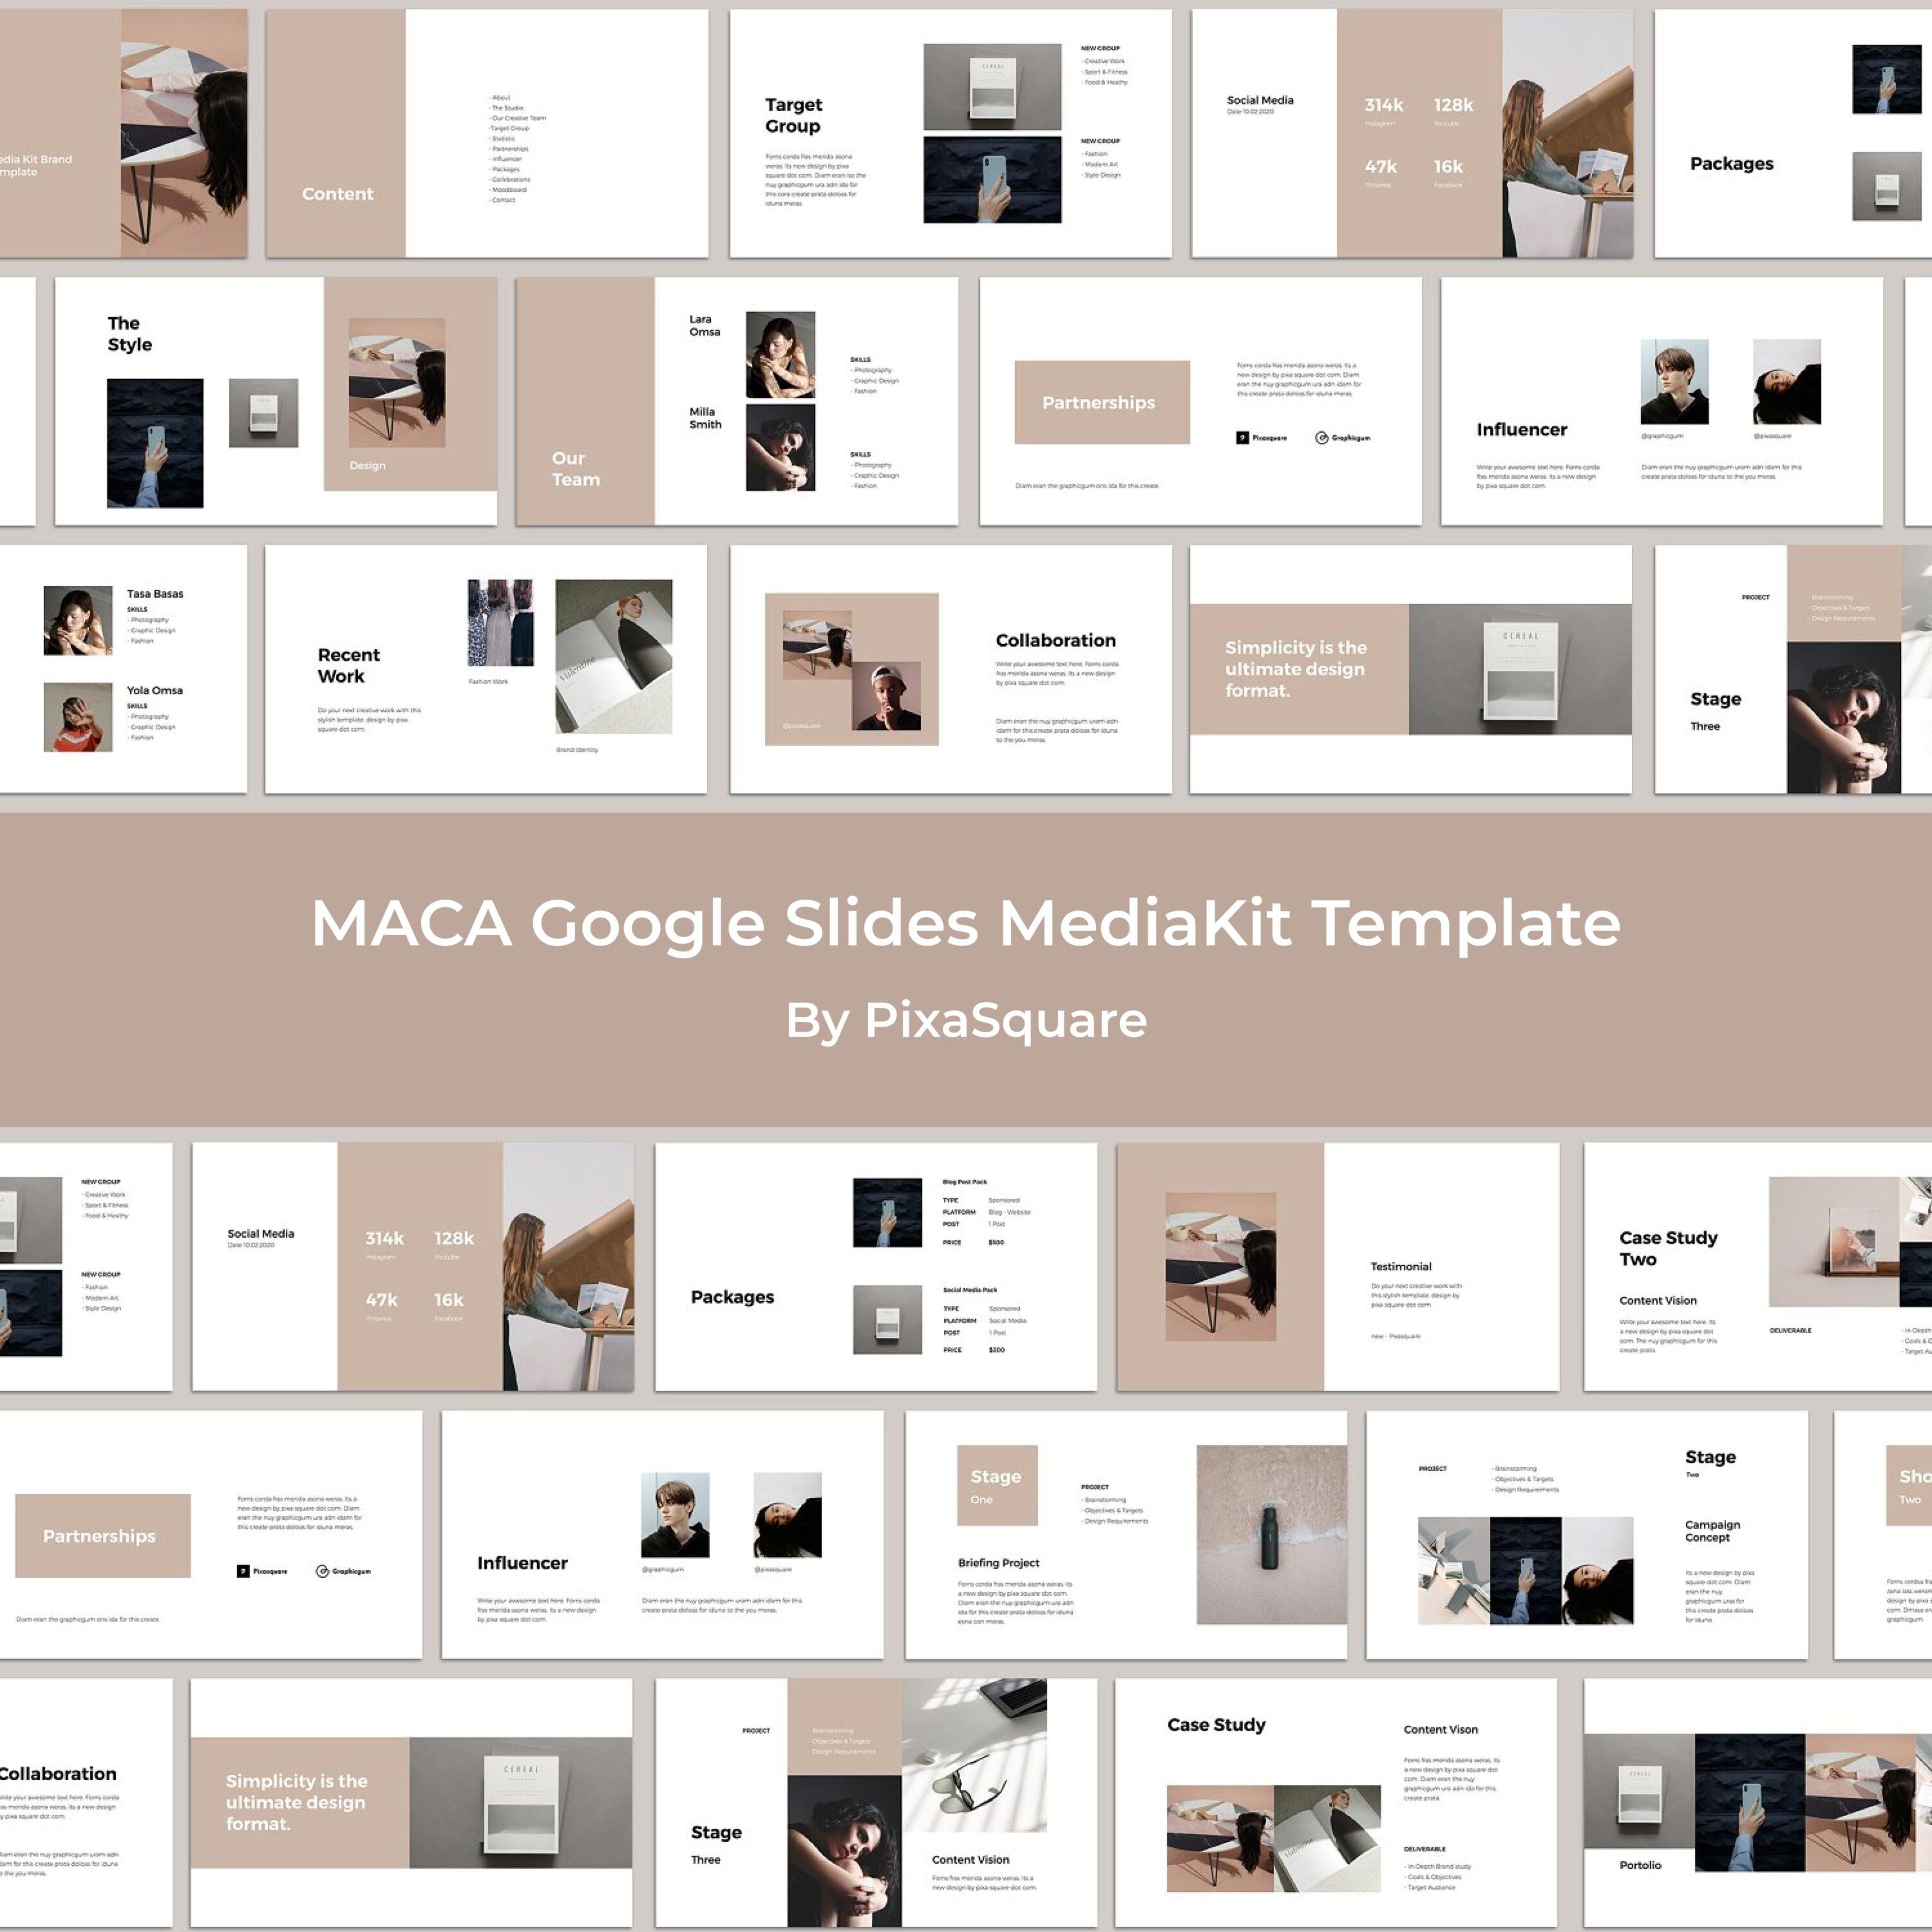 MACA Google Slides MediaKit Template.